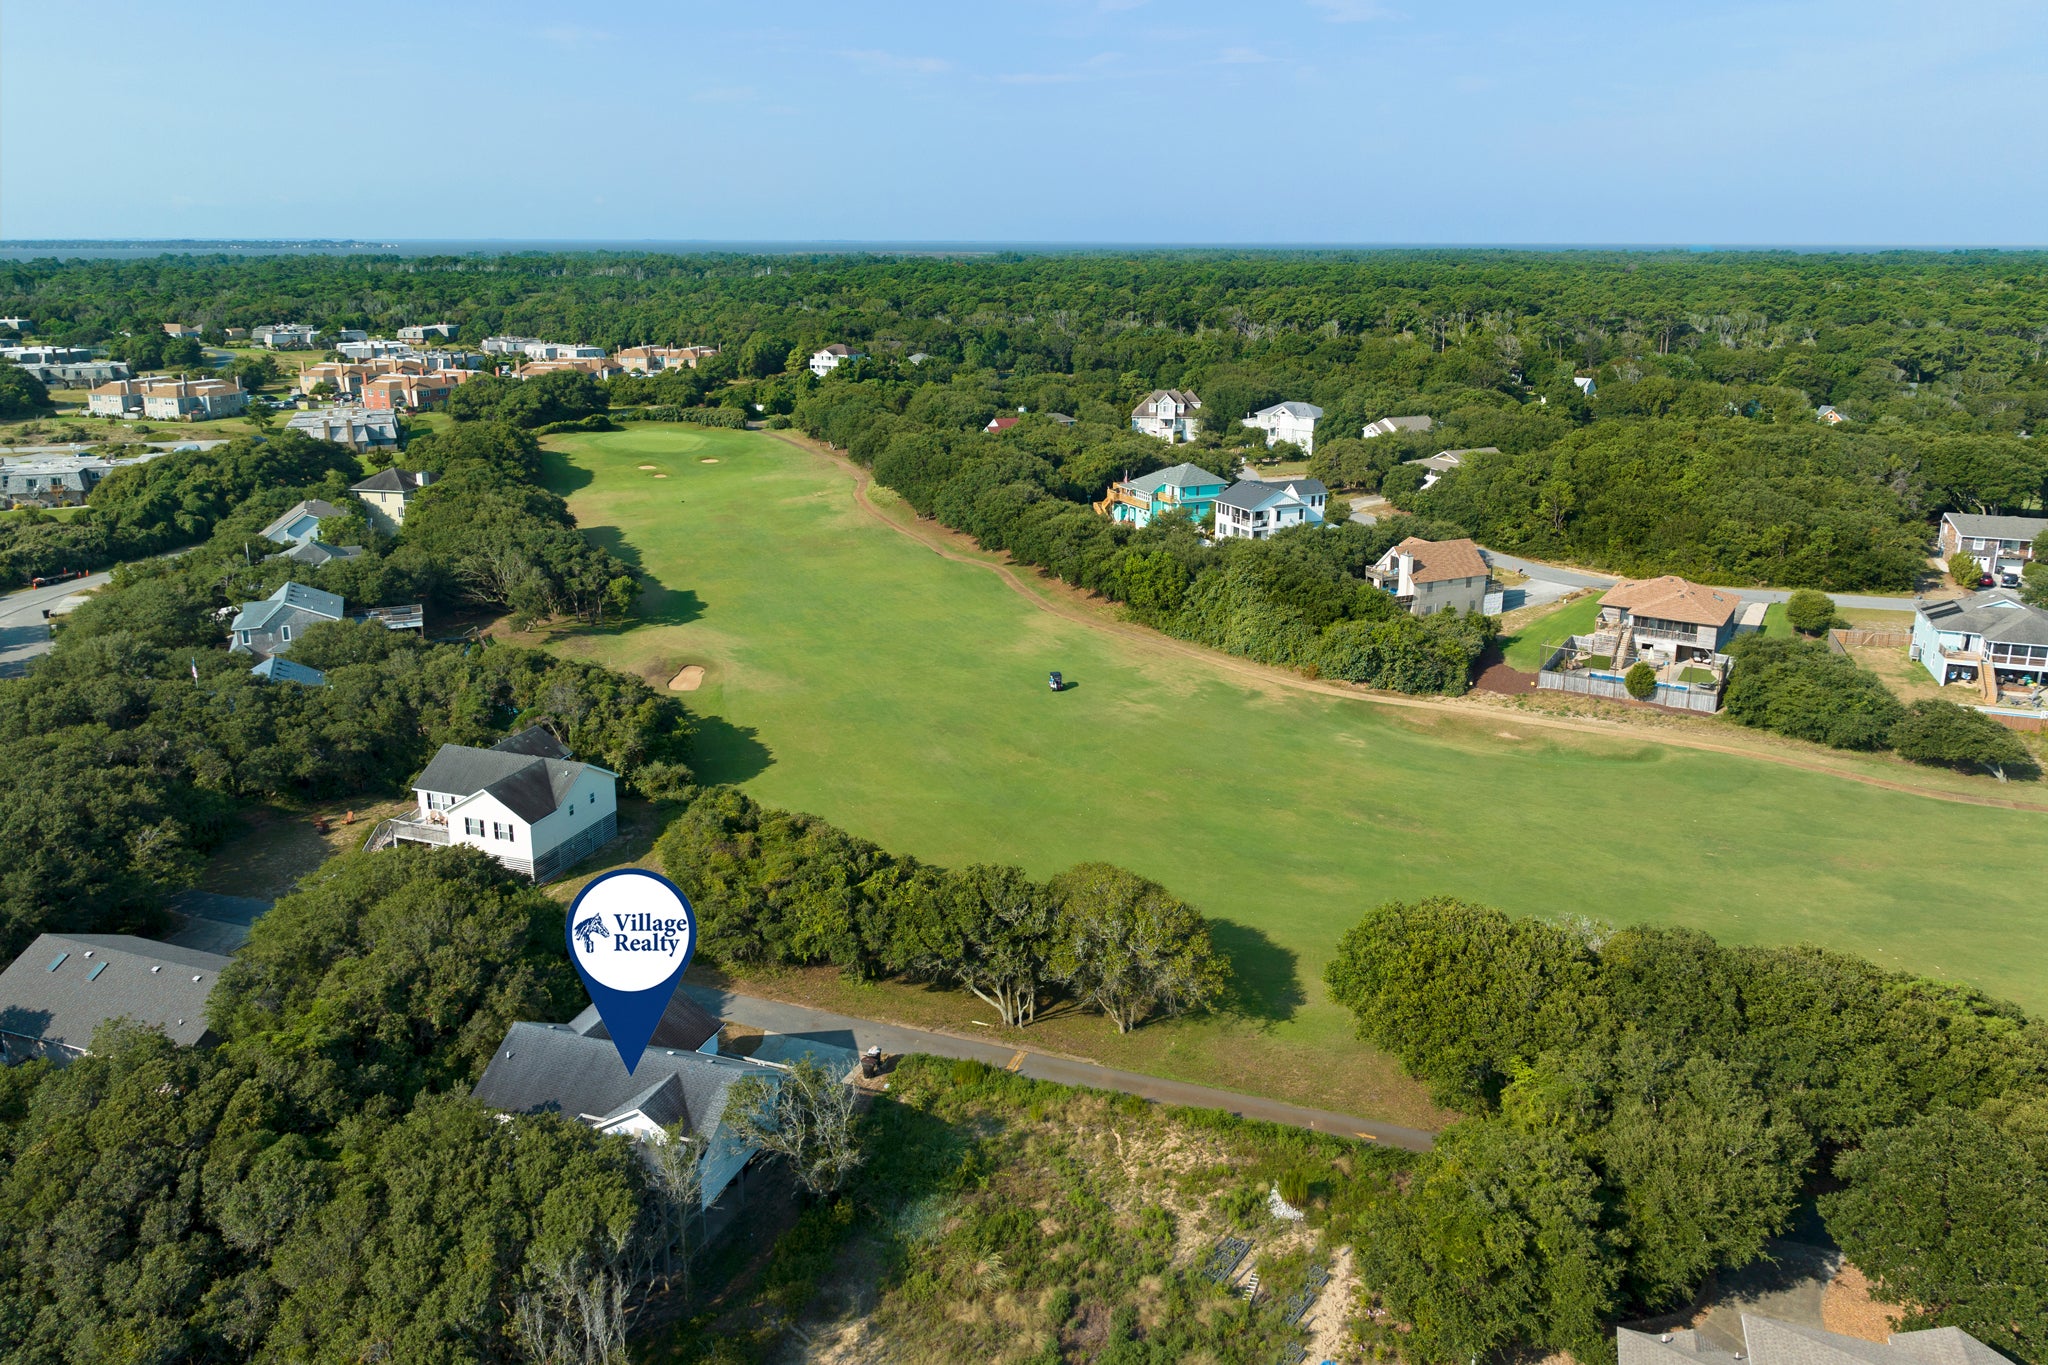 KH6525: Blue Paradise Club | Aerial View